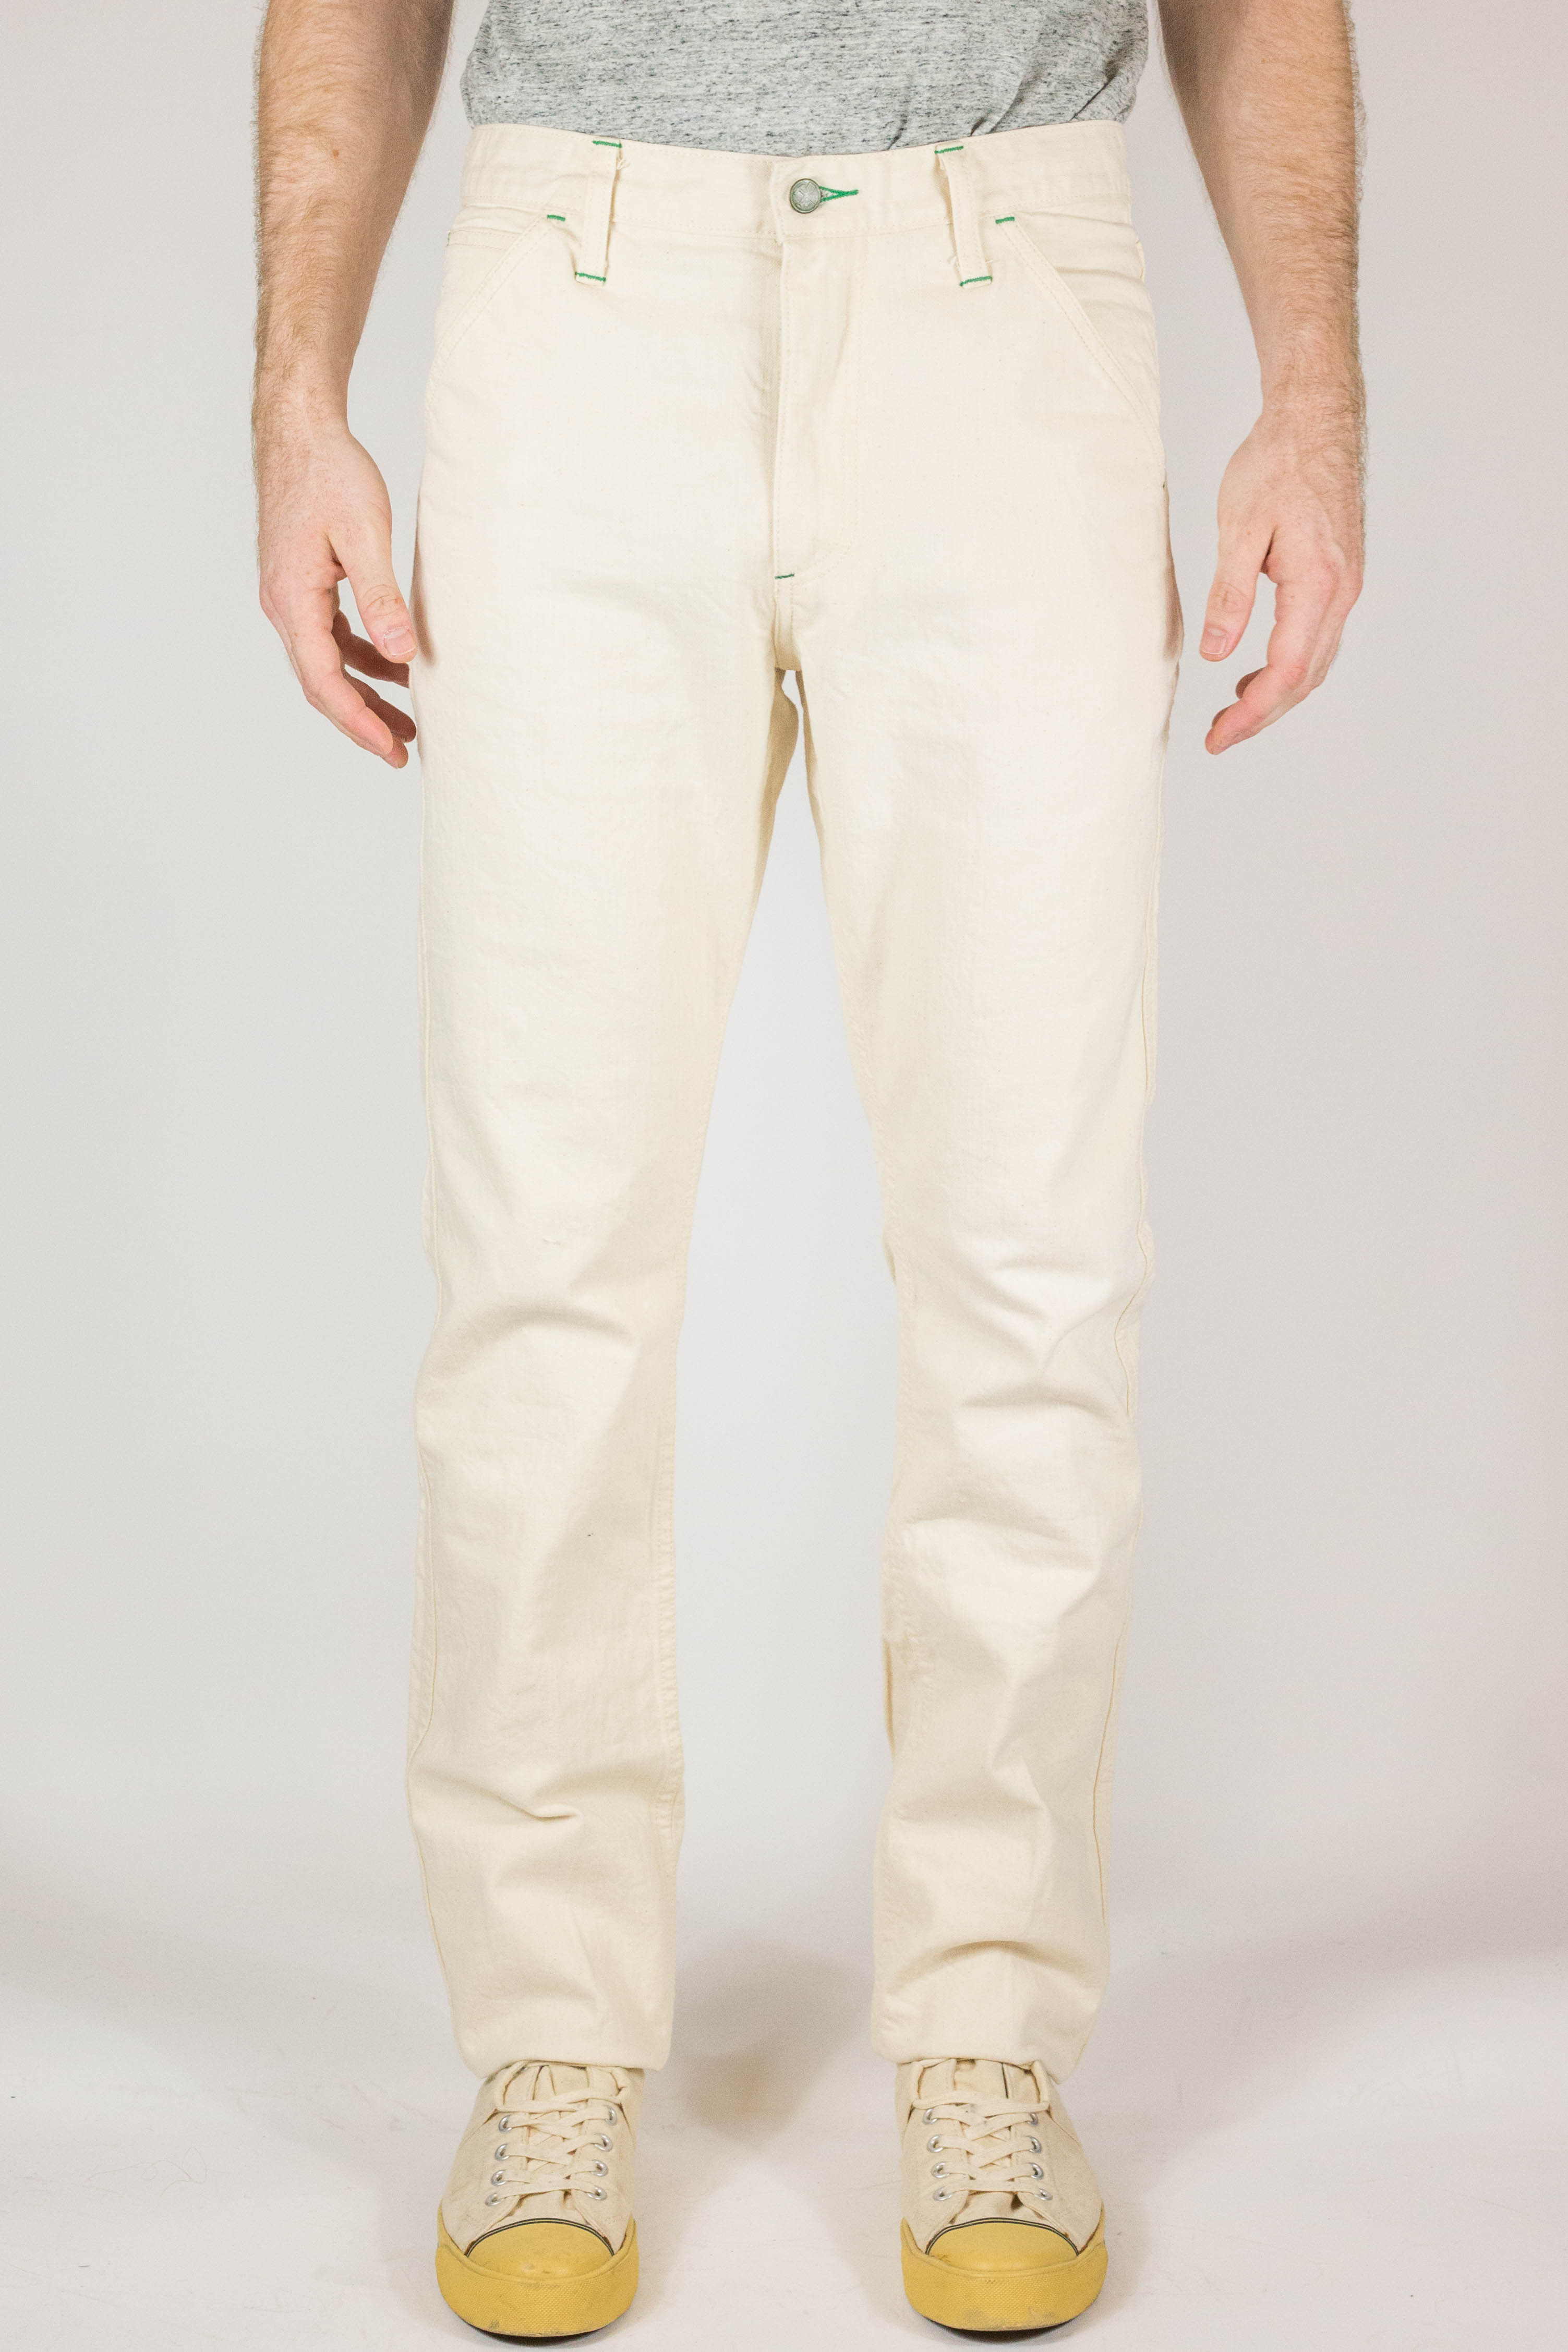 Banana Republic, Jeans, Nwt Banana Republic White Oak Cone Denim Jeans  White Oak Mens Plus Size 4432